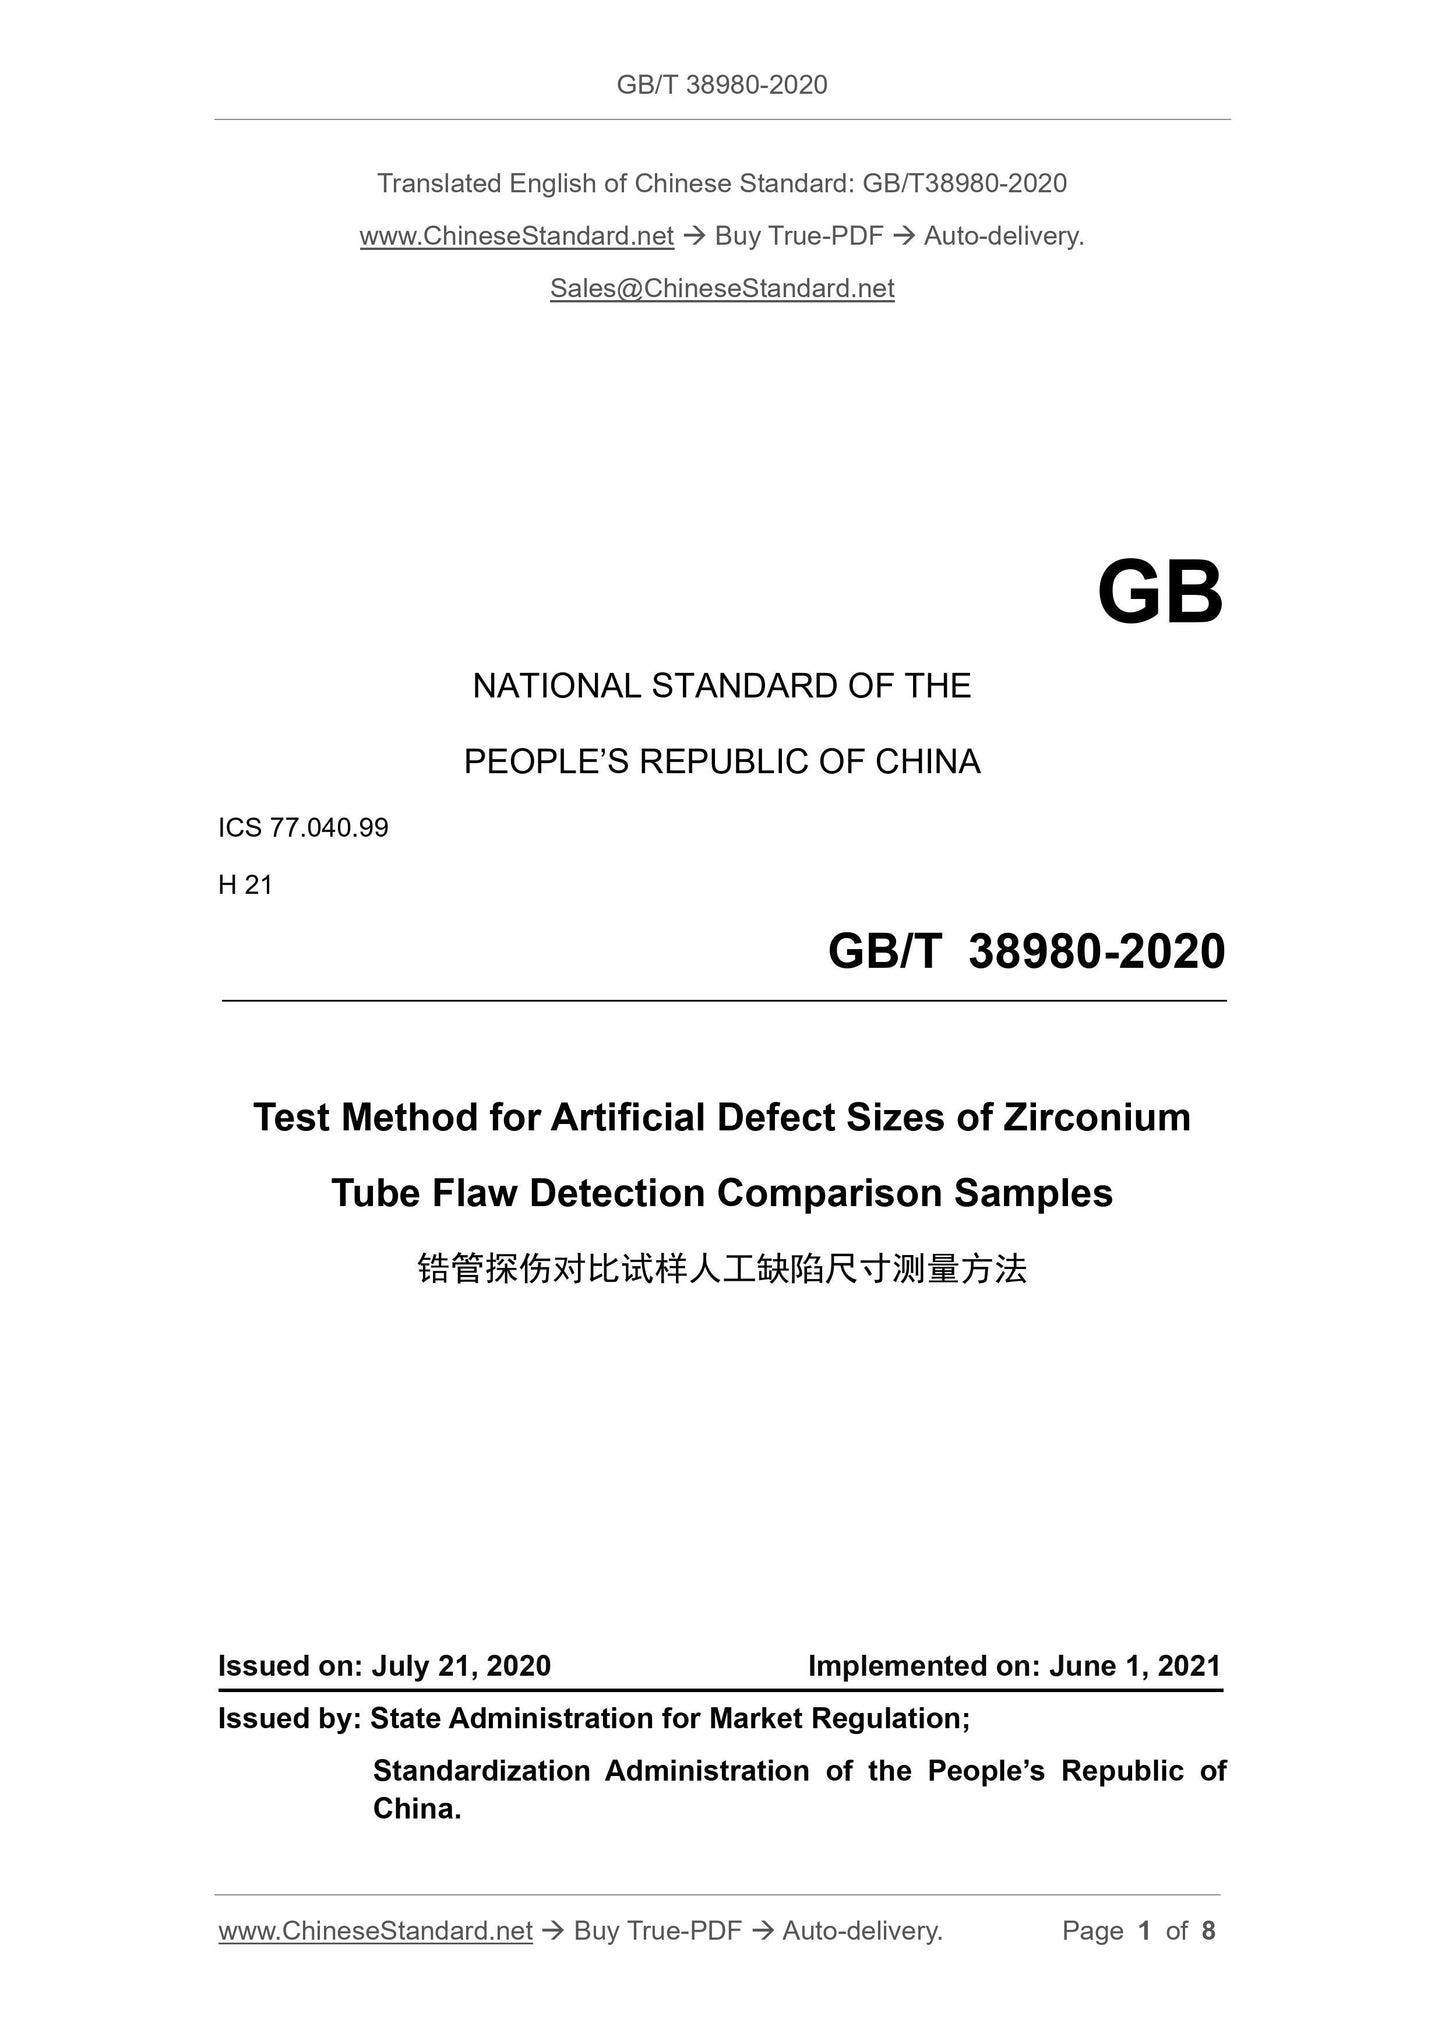 GBT38980-2020 Page 1